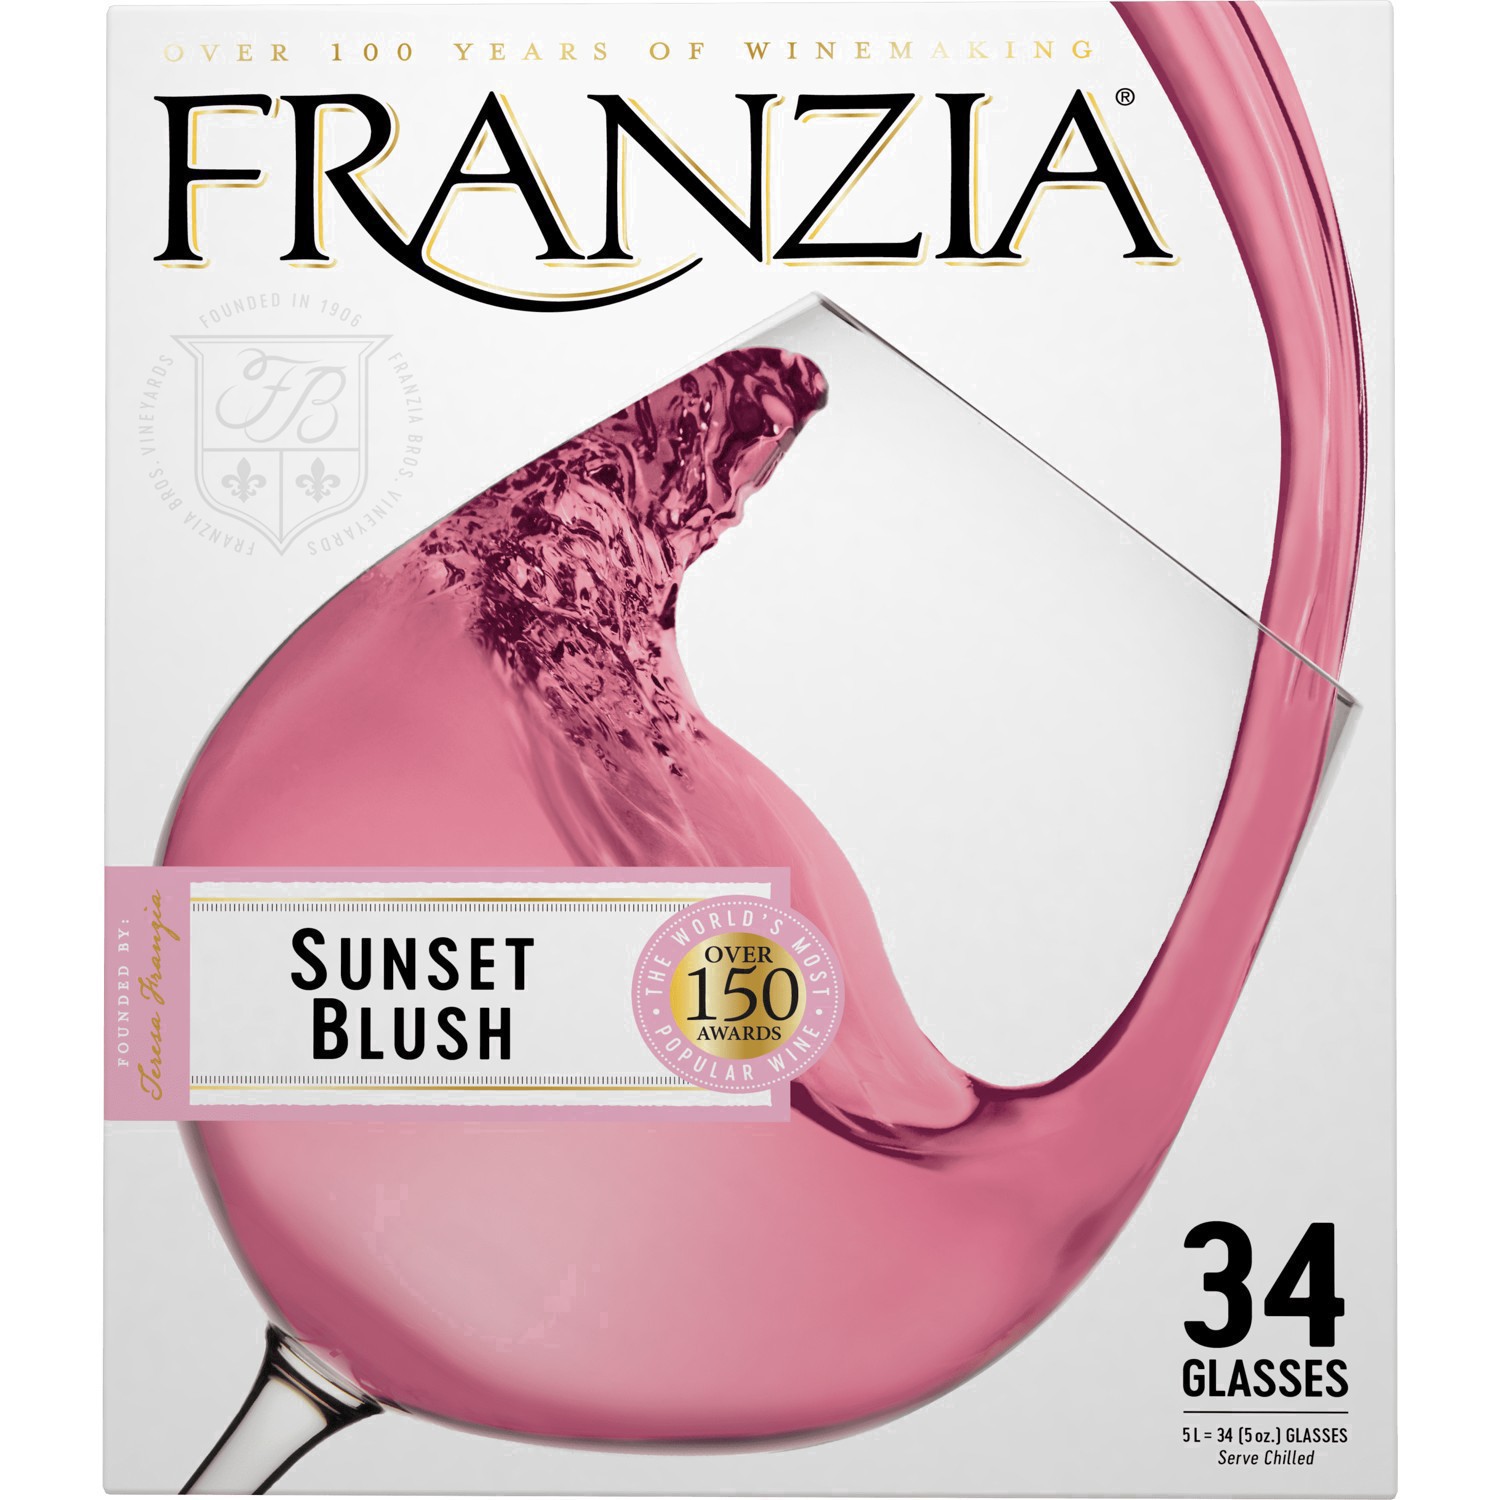 slide 8 of 27, Franzia Sunset Blush Pink Wine, 5 liter box